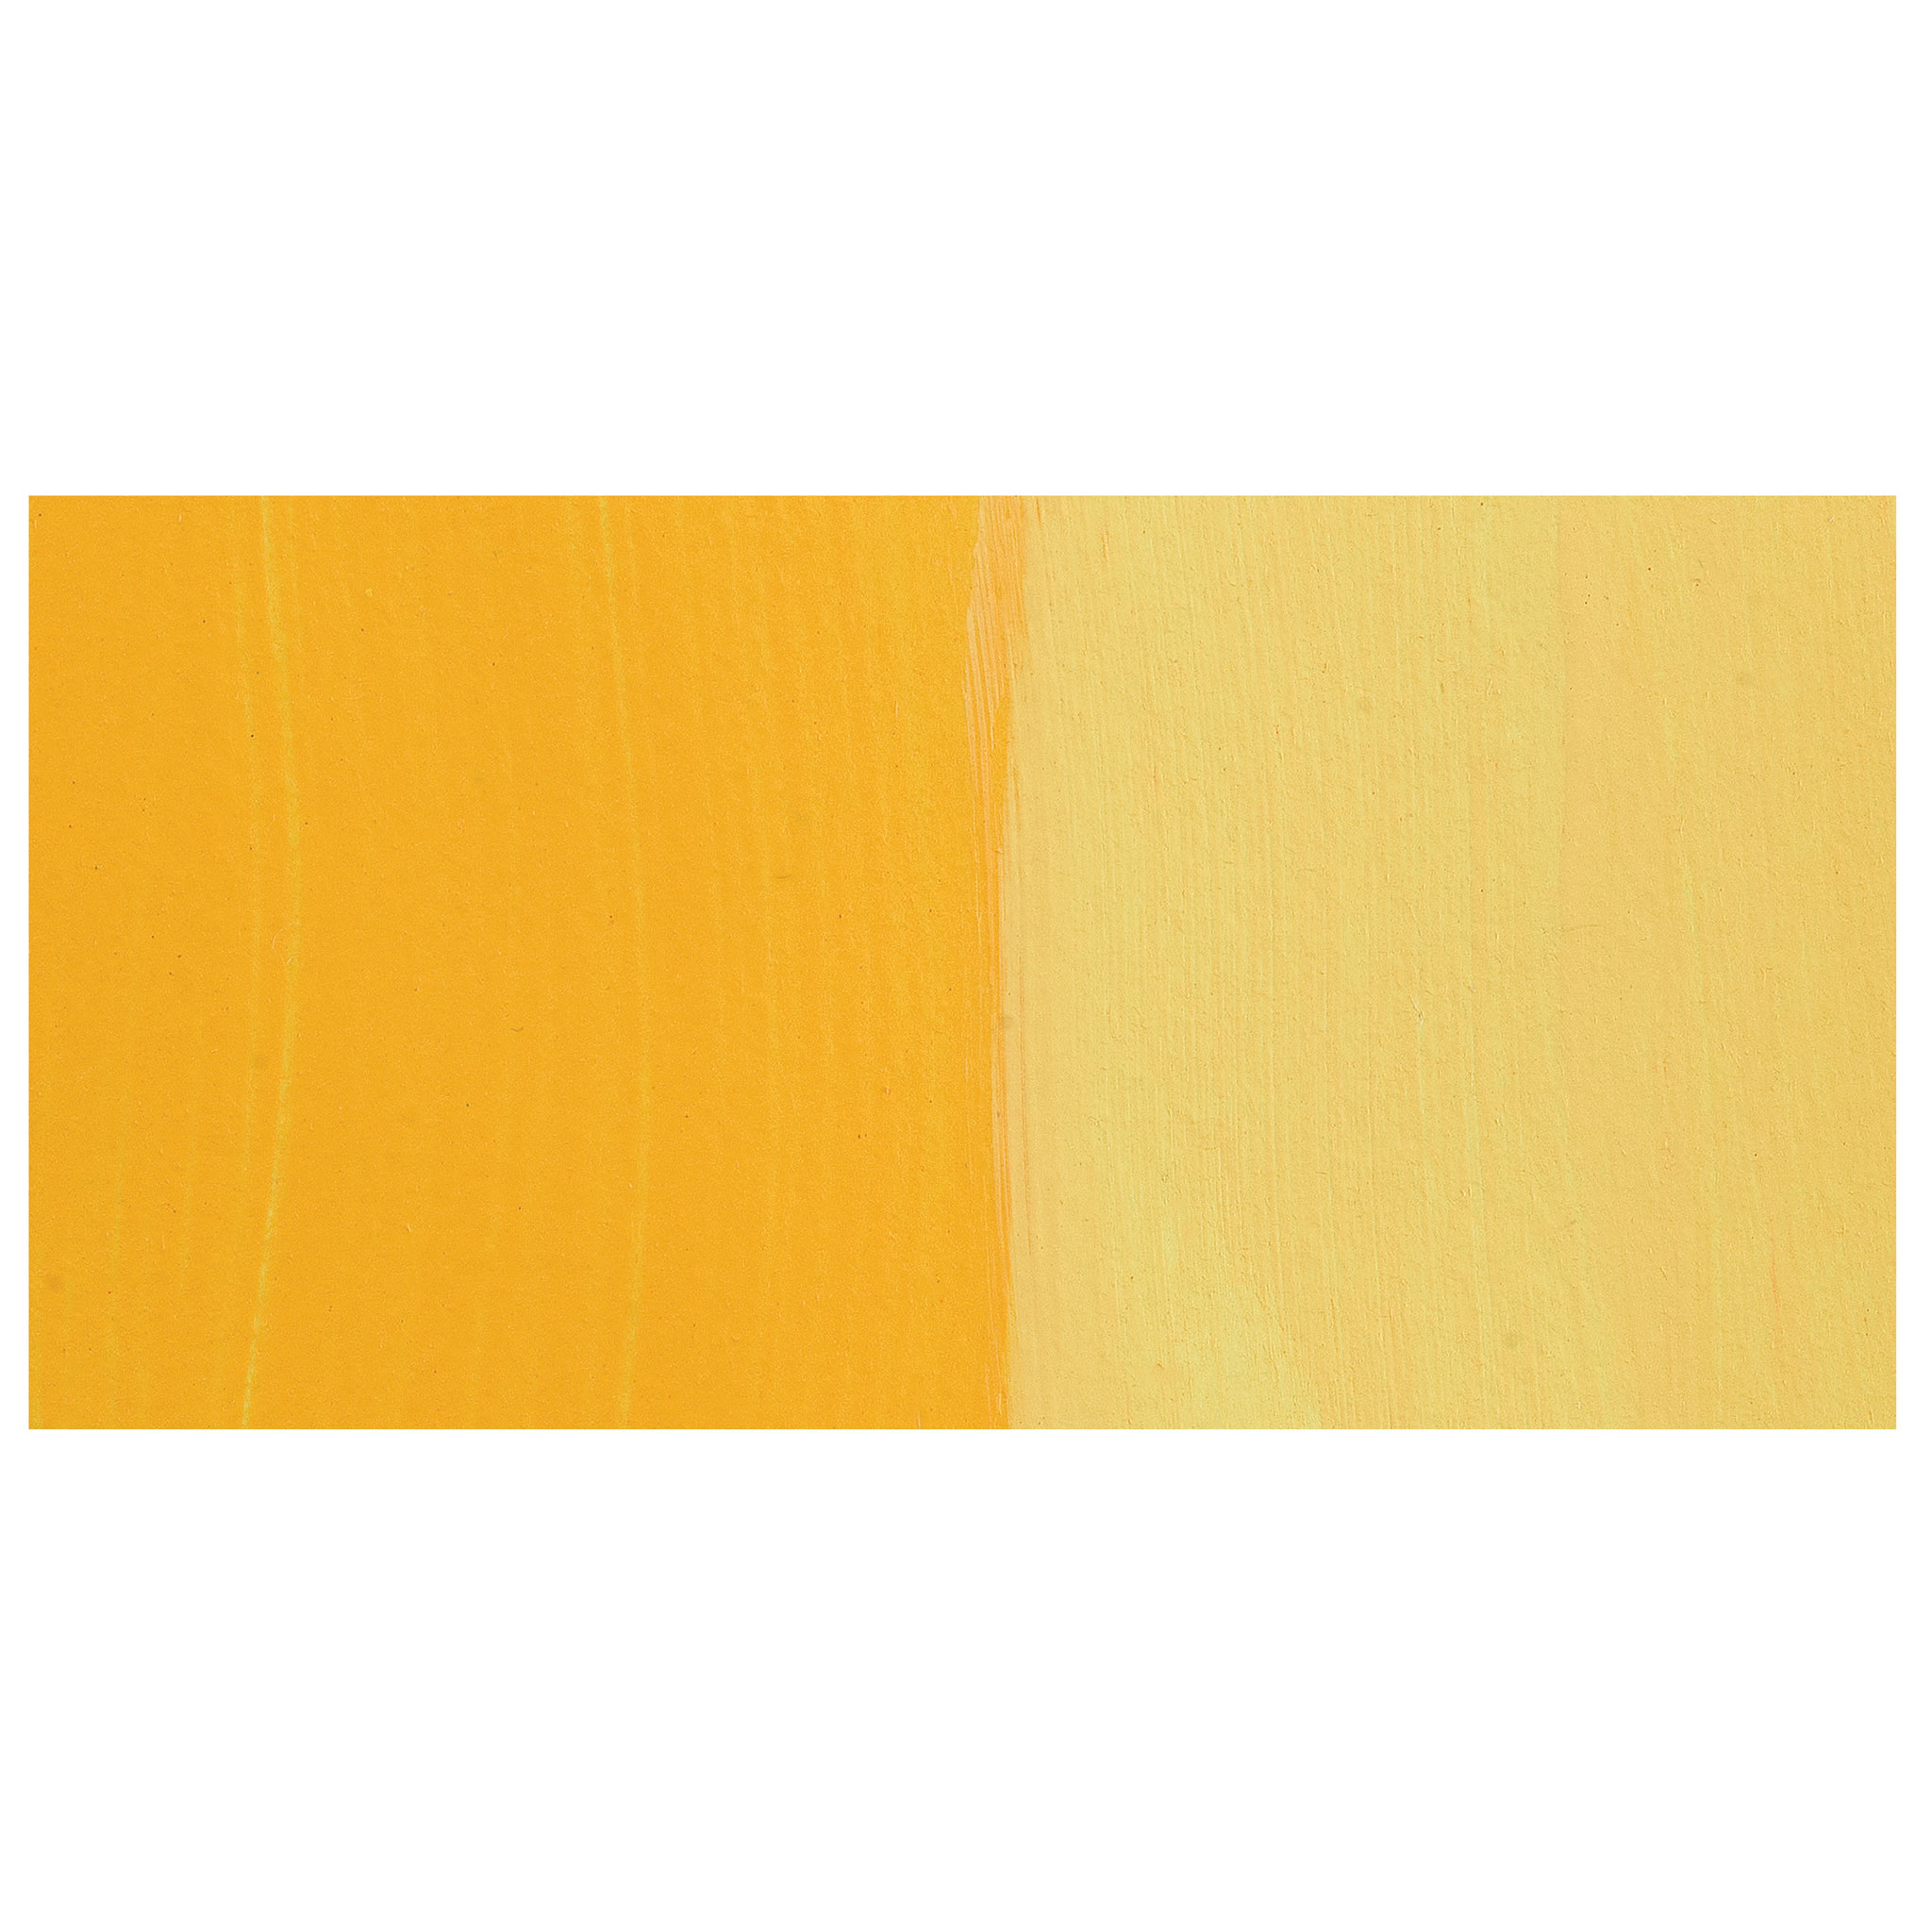 Golden Paintworks Mural and Theme Acrylic Paint - Medium Yellow, 16 oz, Jar  